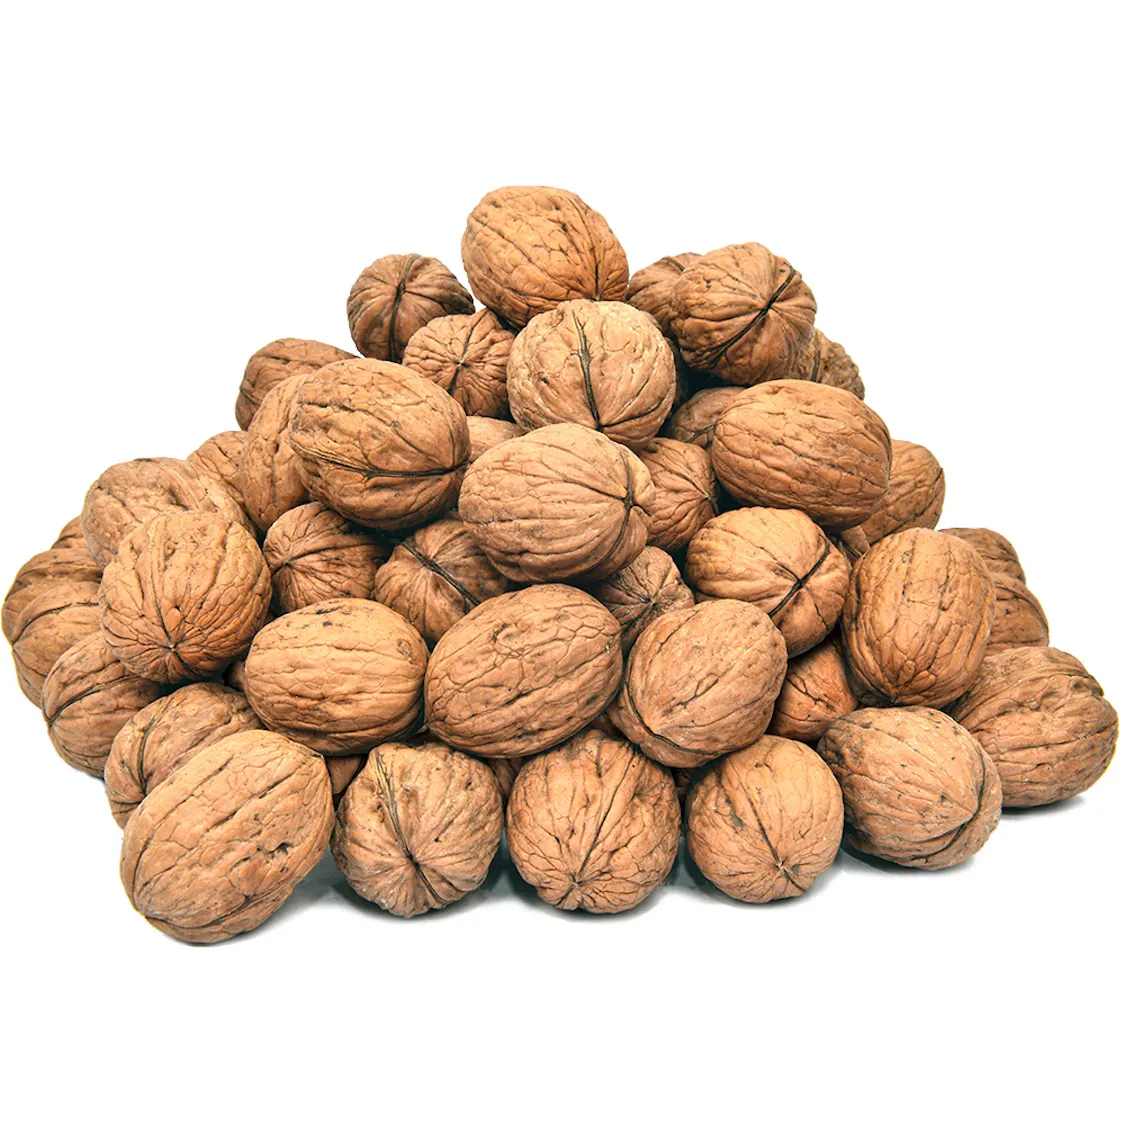 Walnuts Nuts Wholesale Worldwide Export